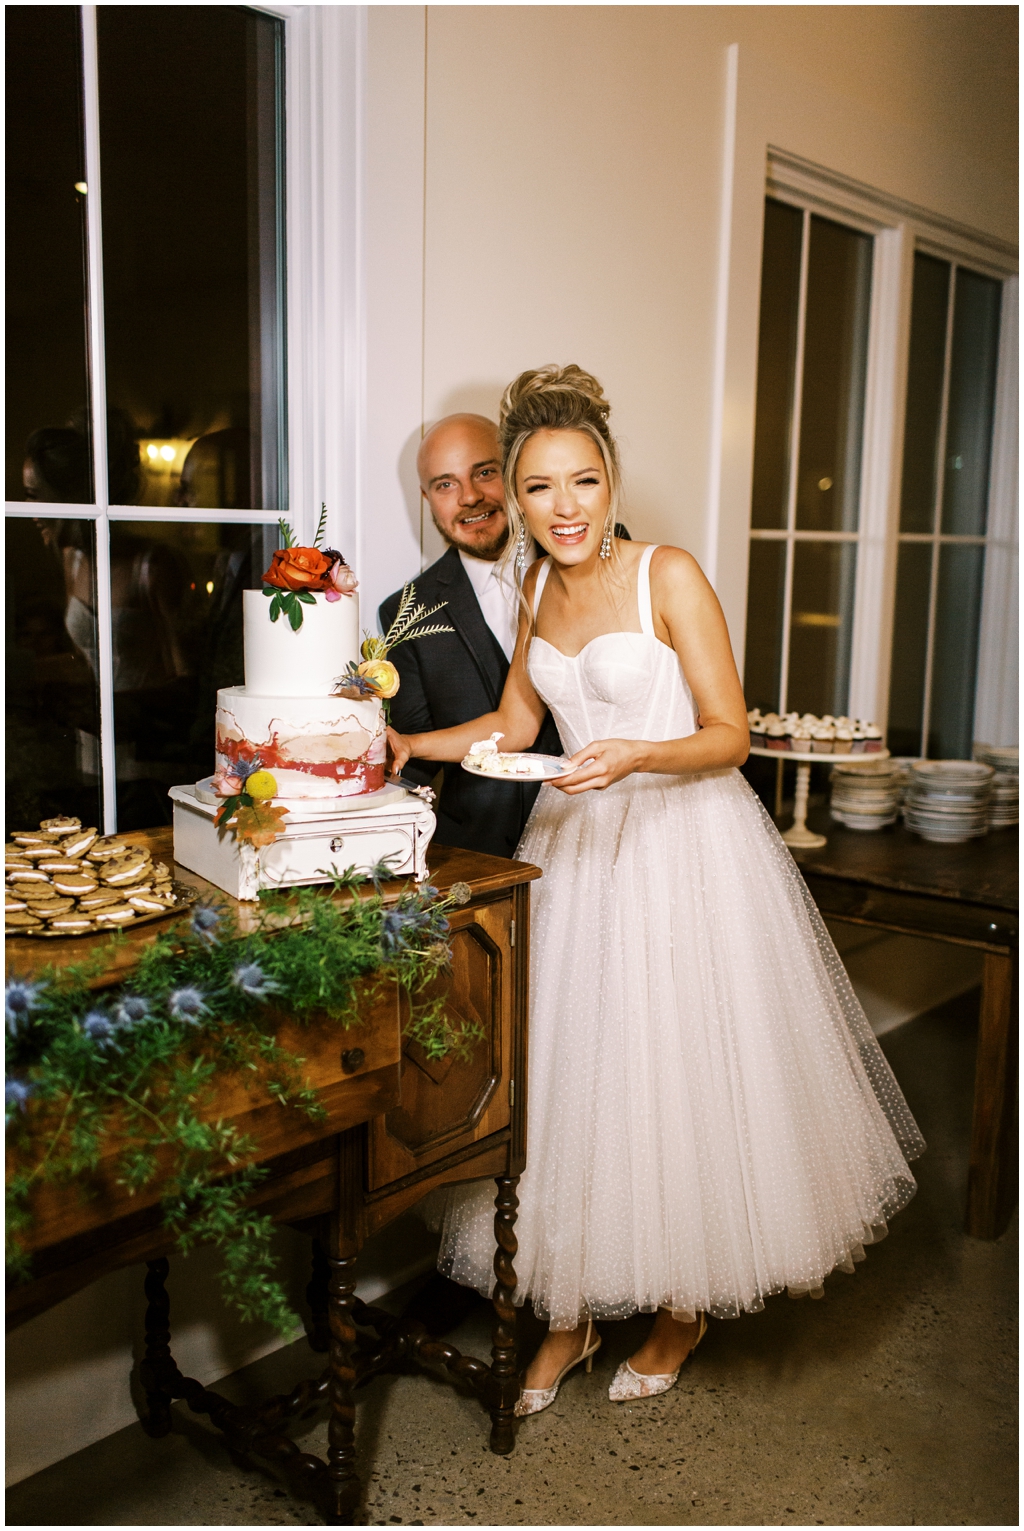 Emily Ann Roberts and Chris Sasser cut the cake at their wedding reception at Marblegate Farm. 